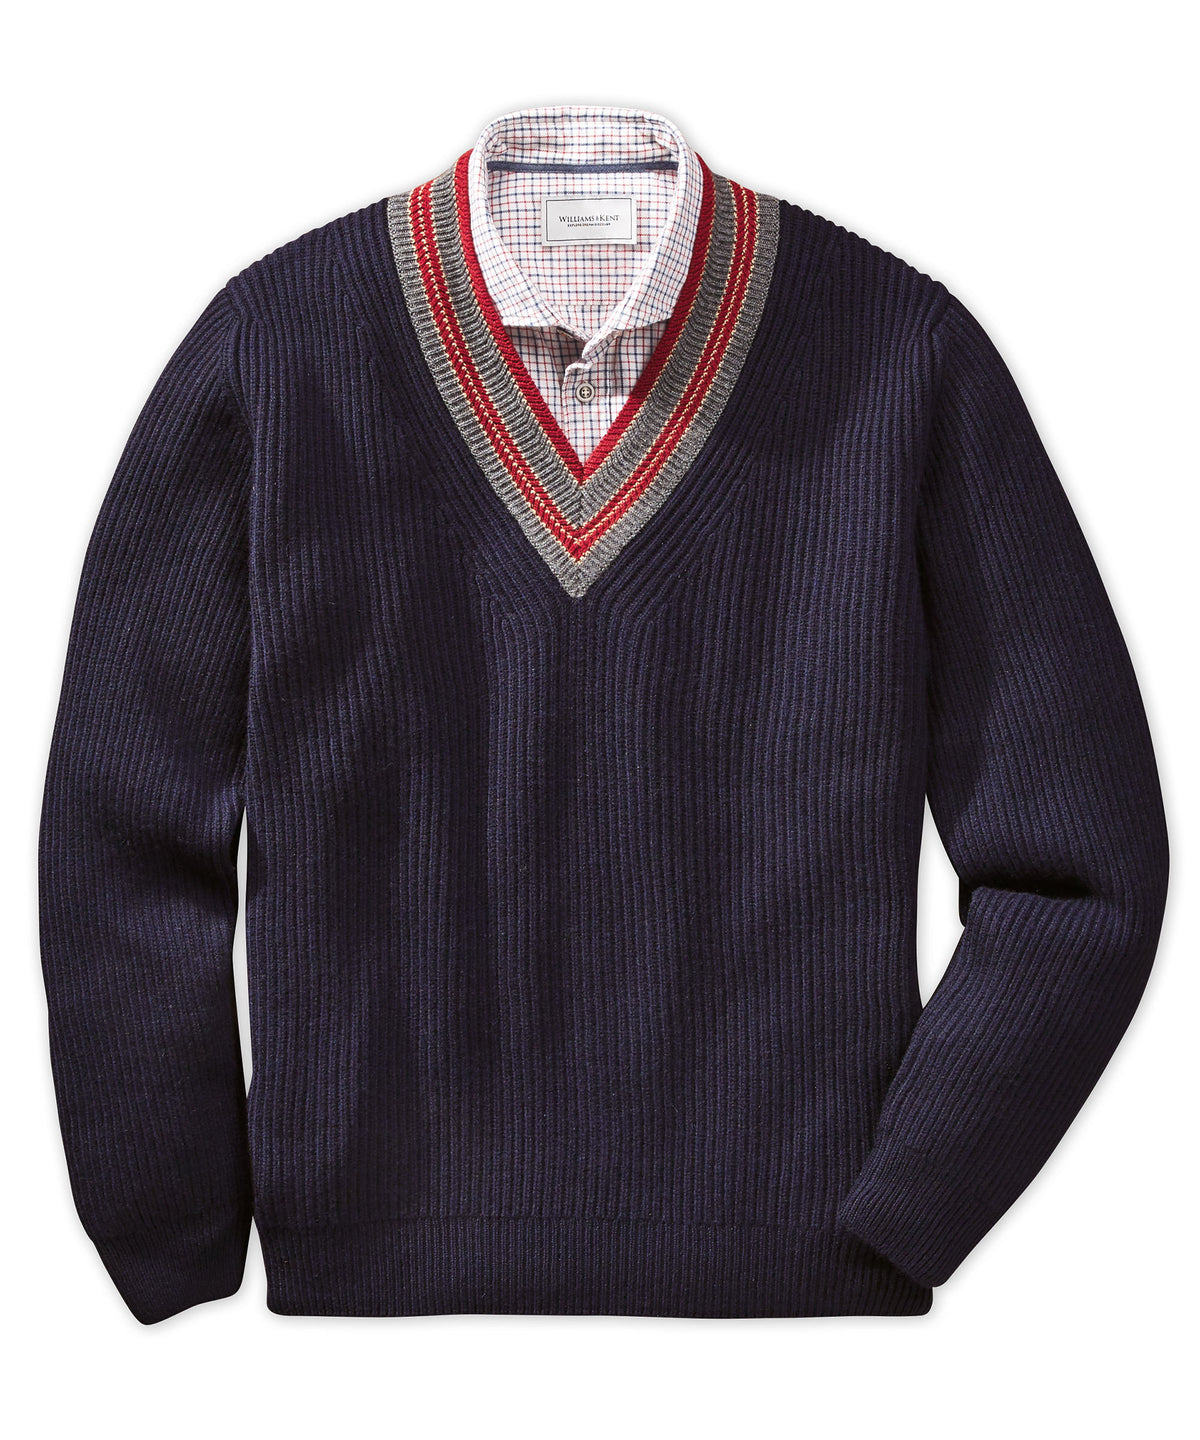 Johnstons of Elgin Scottish Cashmere V-neck Sweater